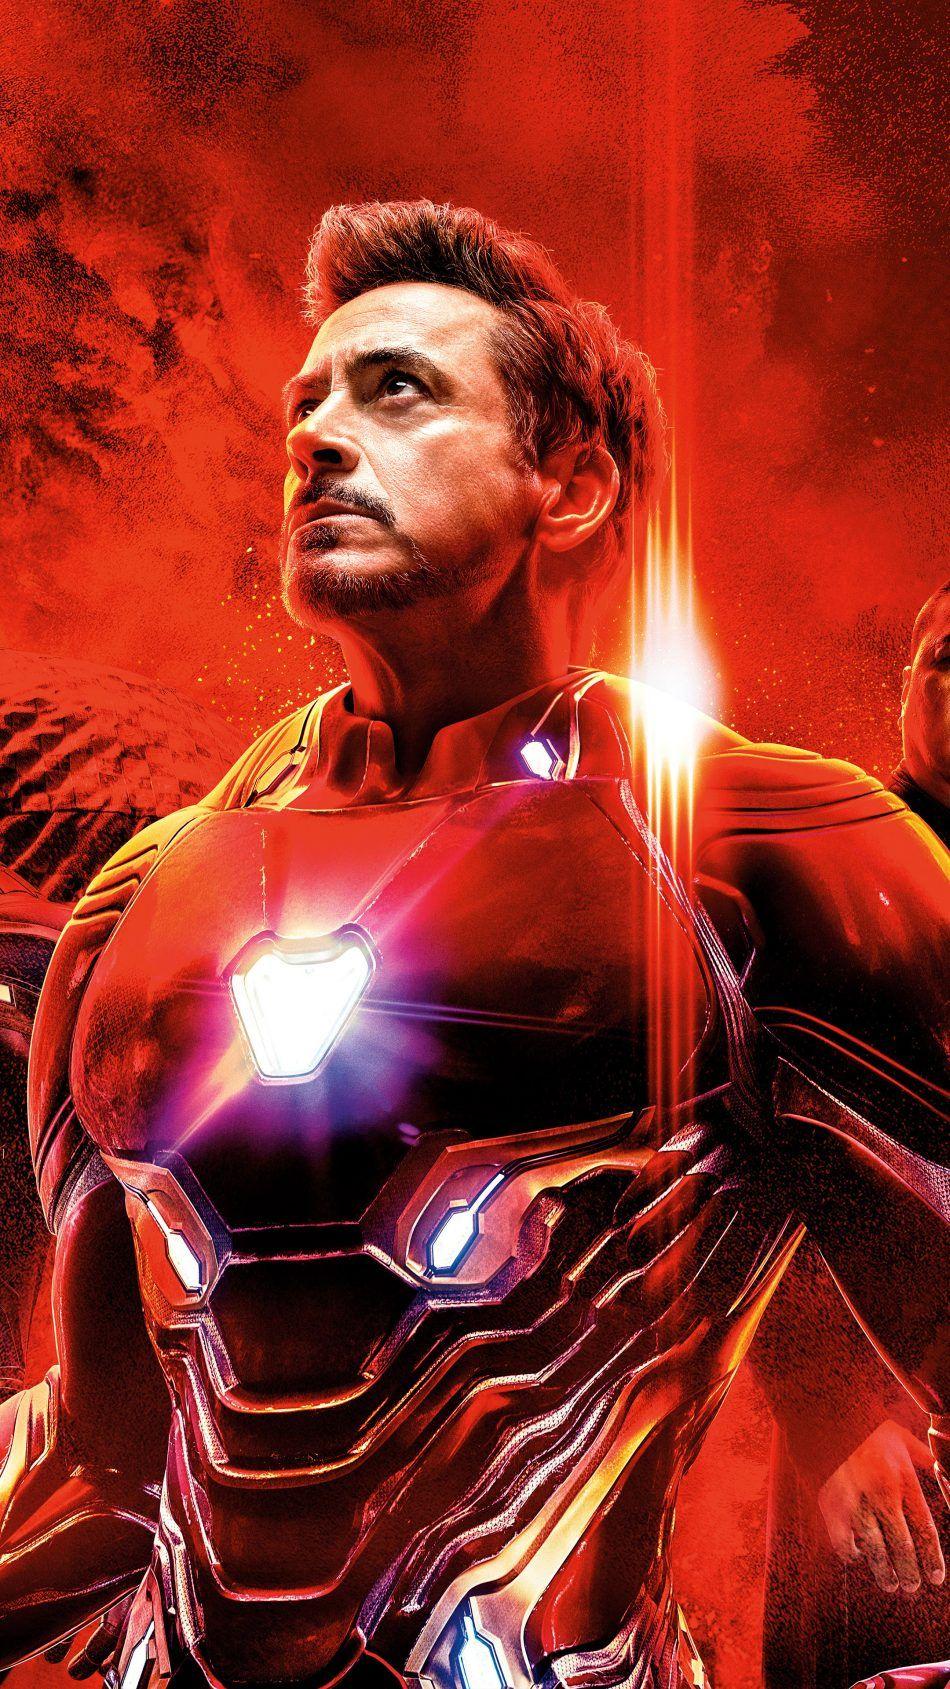 Iron Man In Avengers Endgame. Iron man poster, Iron man HD